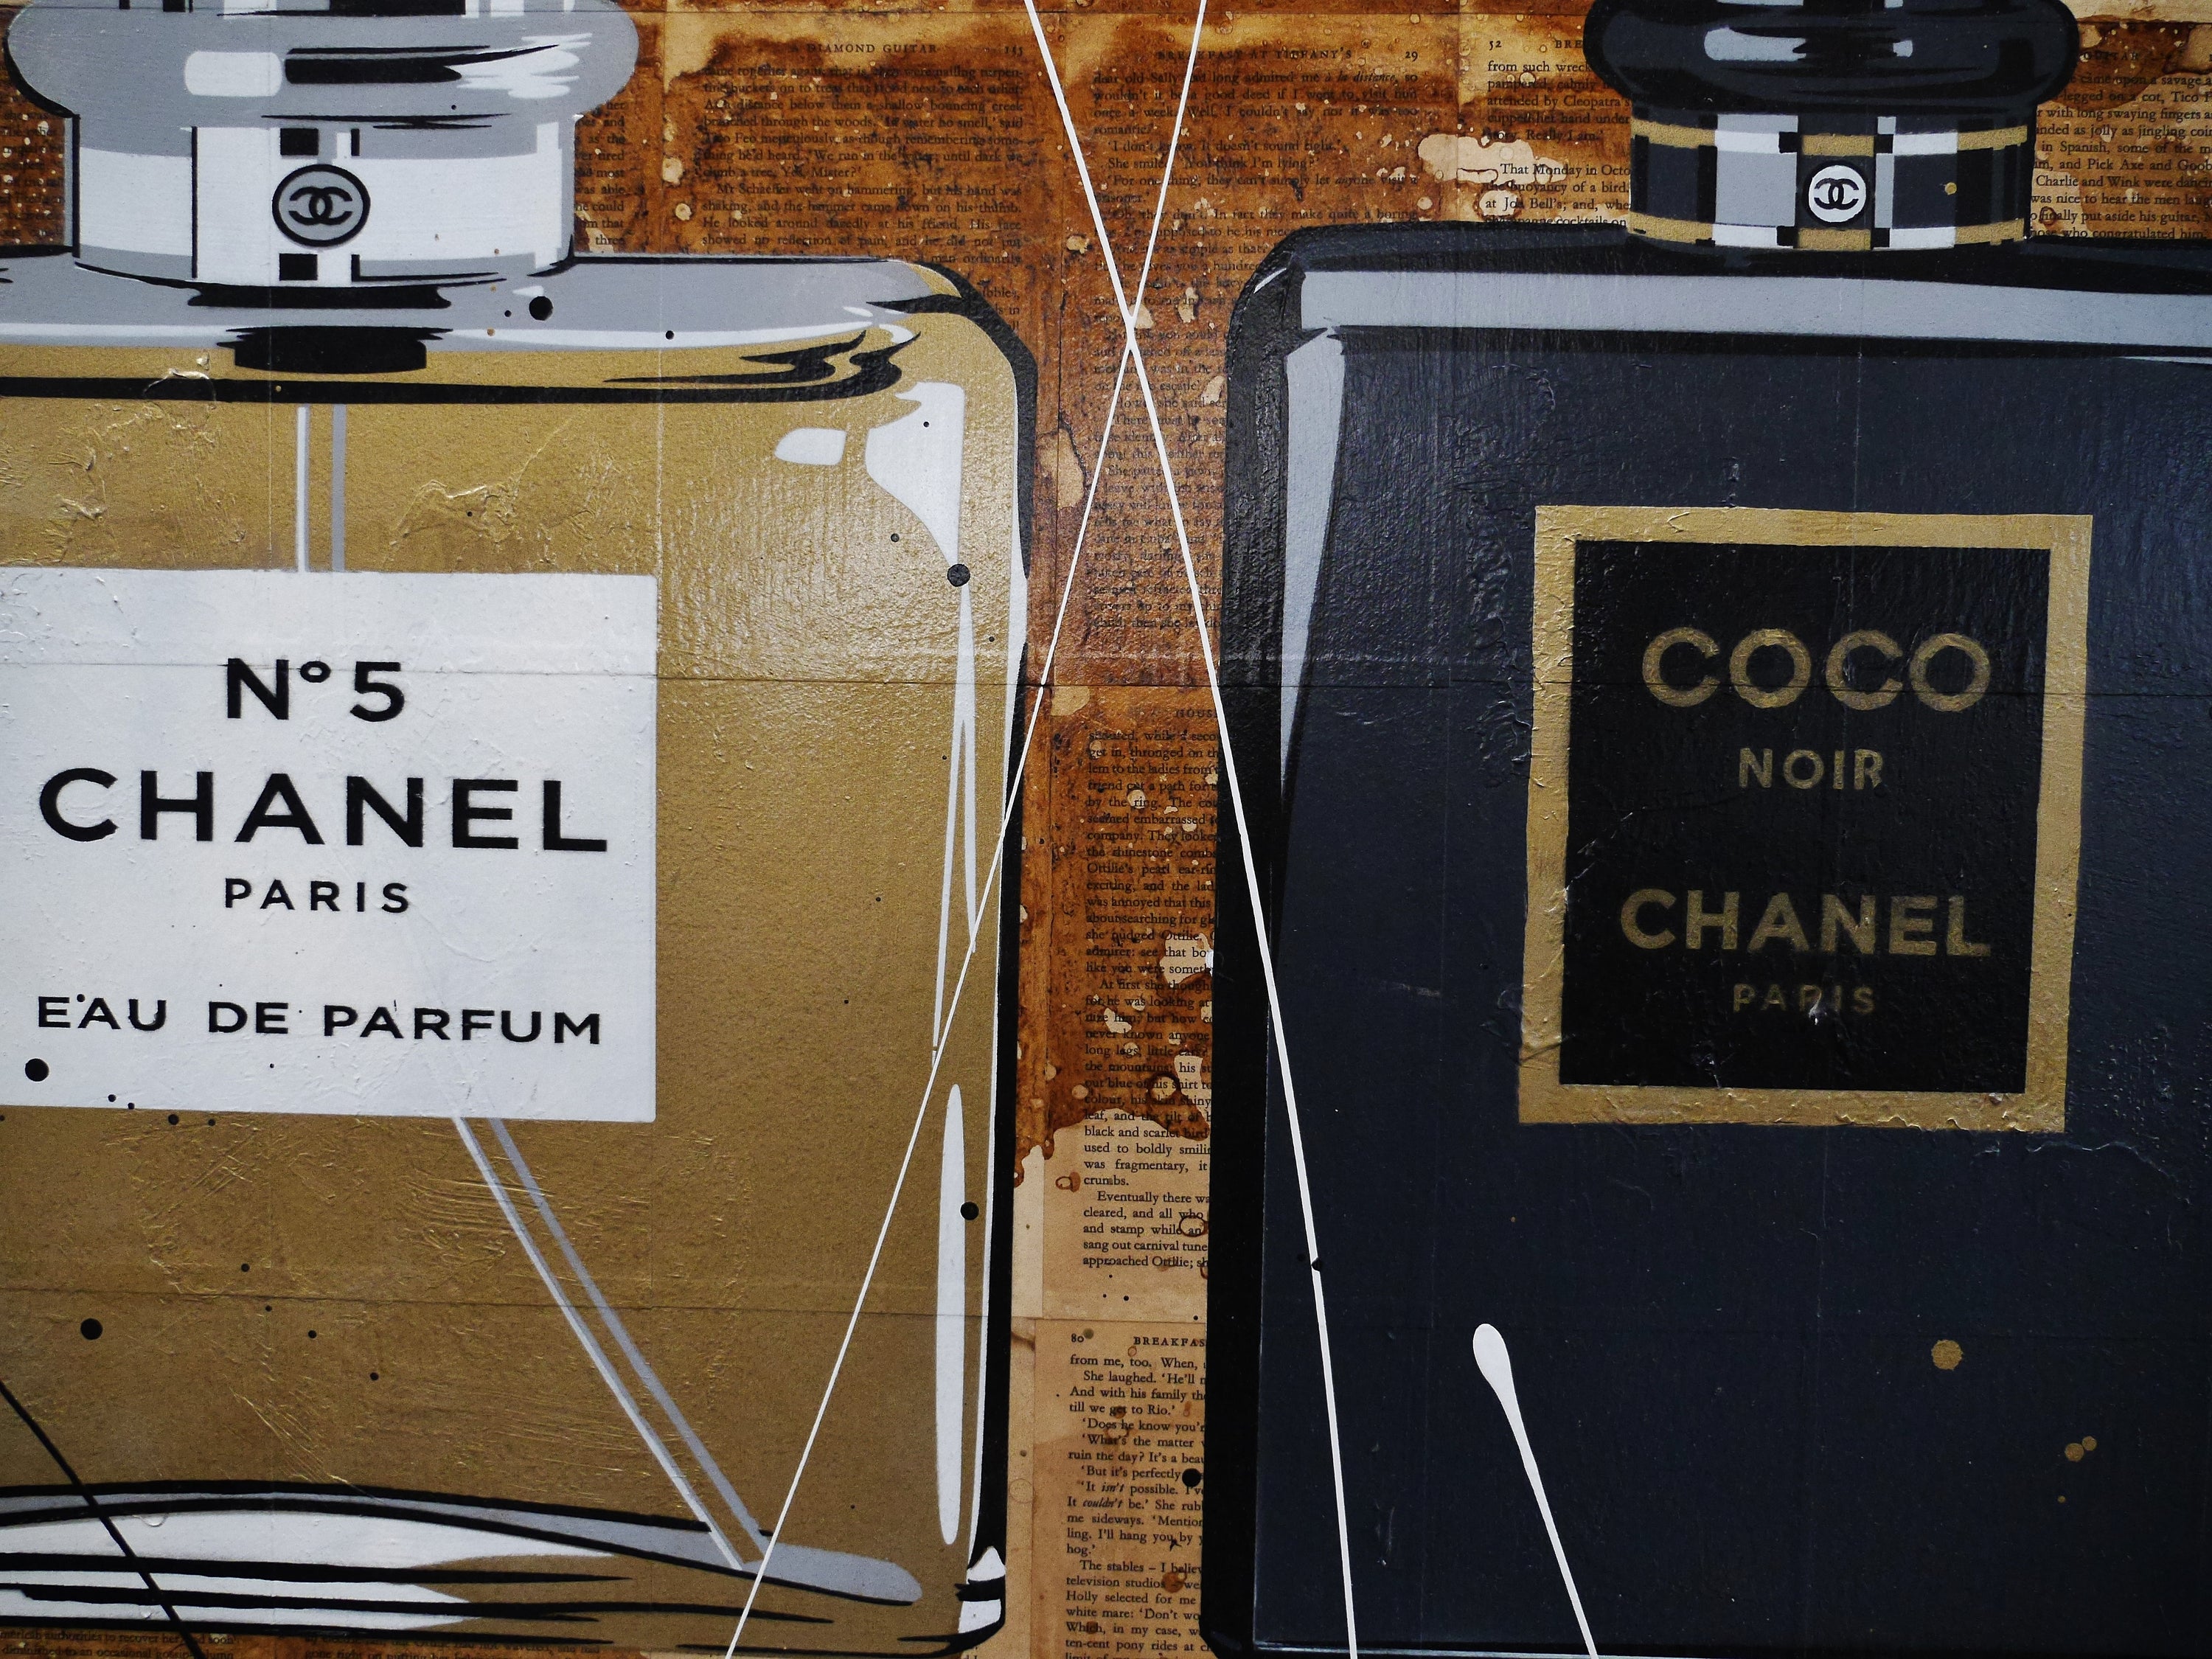 Fragrances 160cm x 60cm Chanel Perfume Bottles Urban Pop Book Club Painting (SOLD)